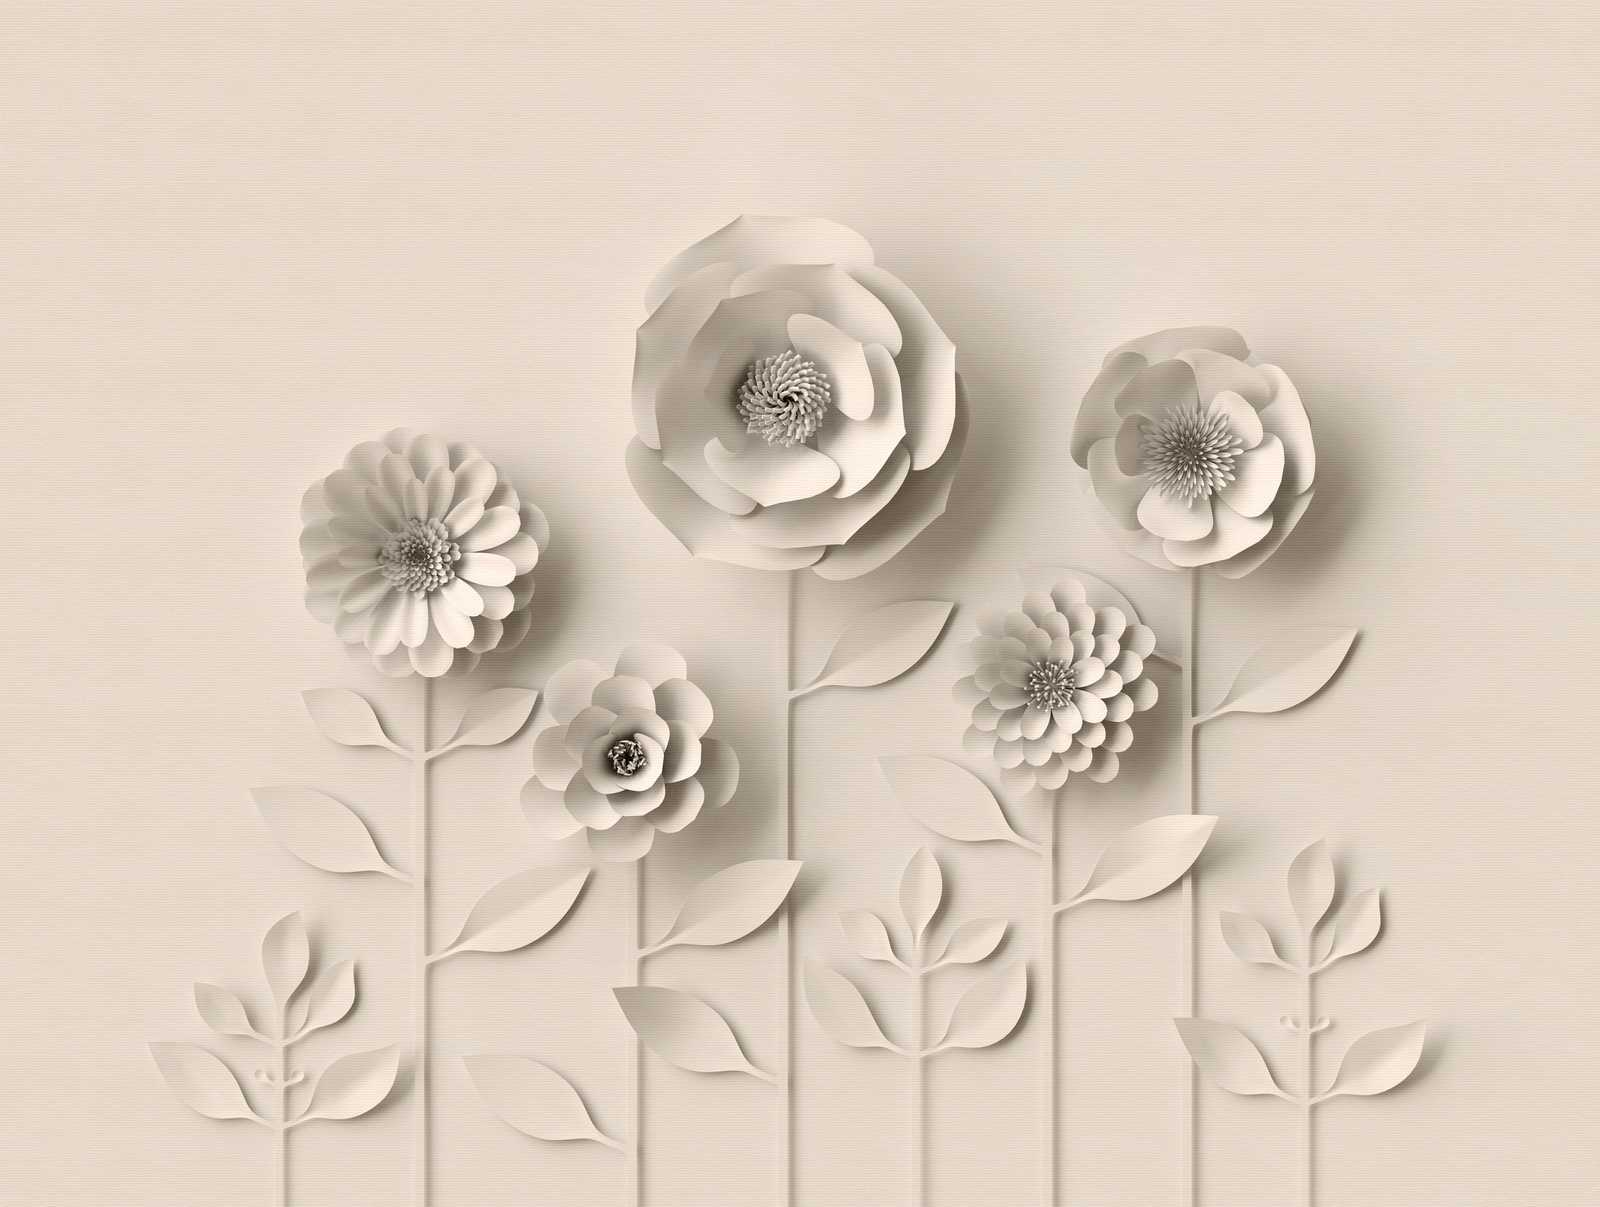             Papeles pintados novedad - Papel pintado motivo 3D con flores de papel, blanco crema
        